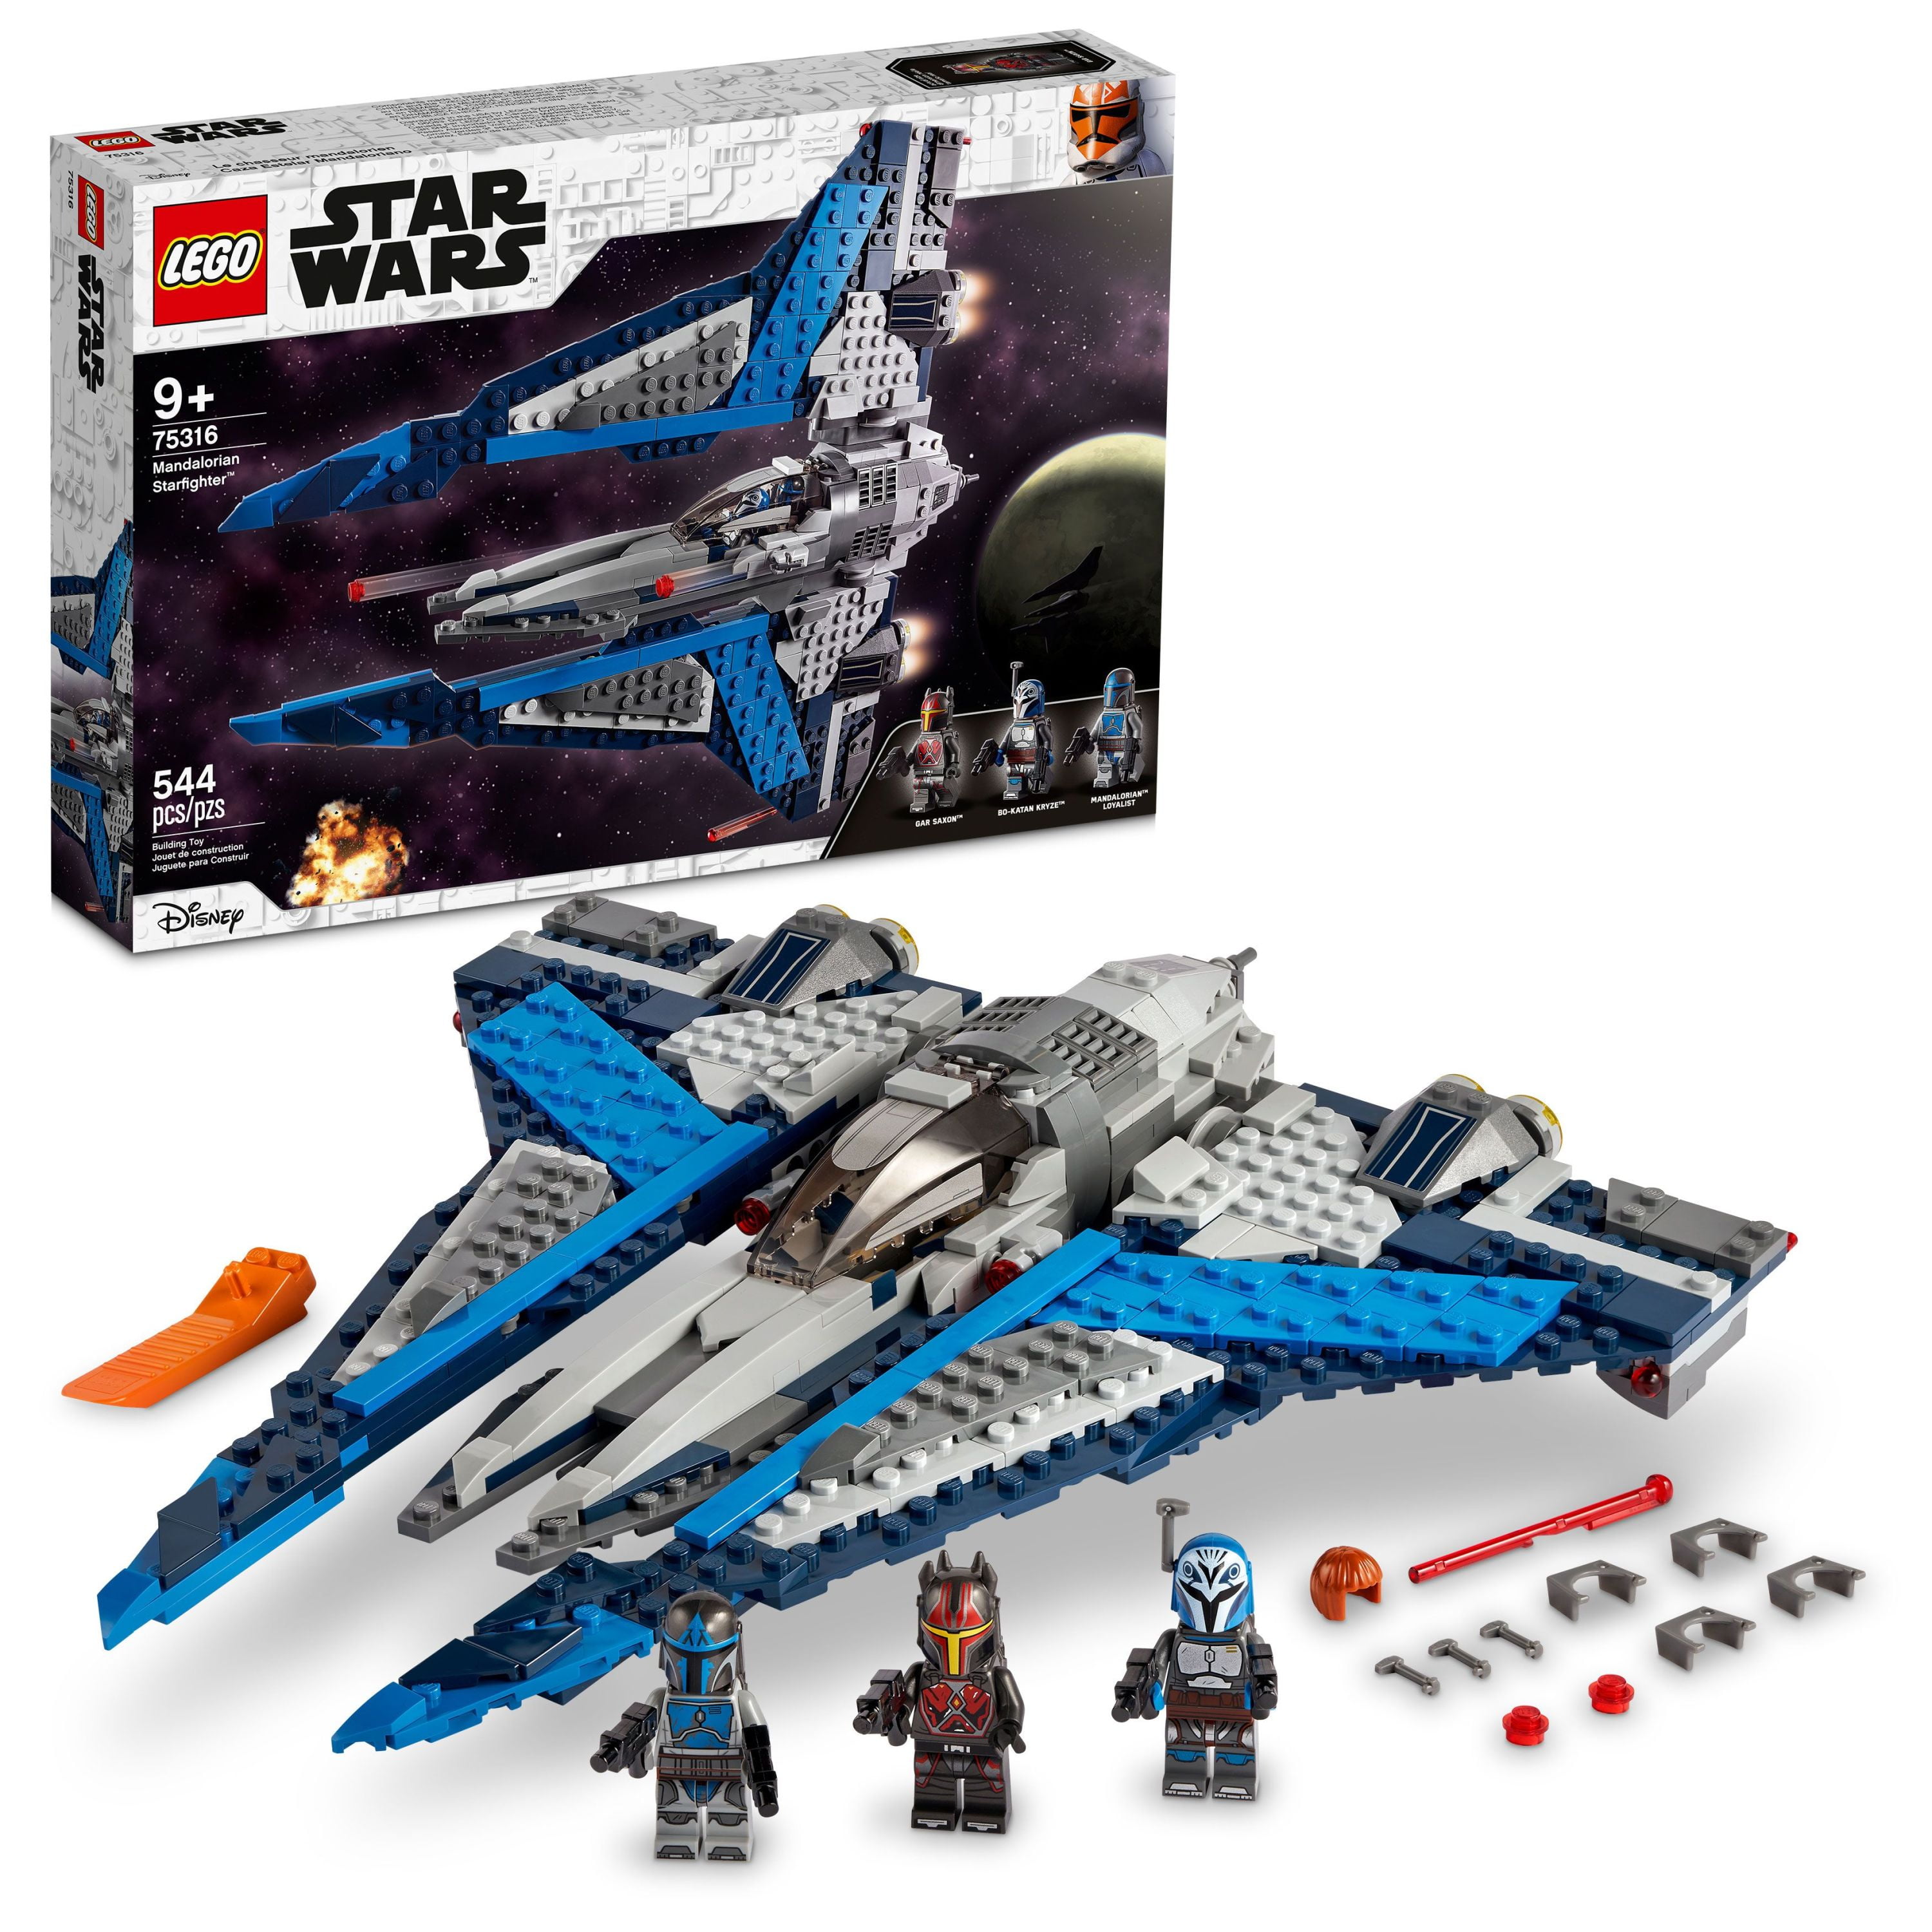 overraskende definitive Almægtig LEGO Star Wars Mandalorian Starfighter 75316 Building Toy Set (544 Pieces)  - Walmart.com